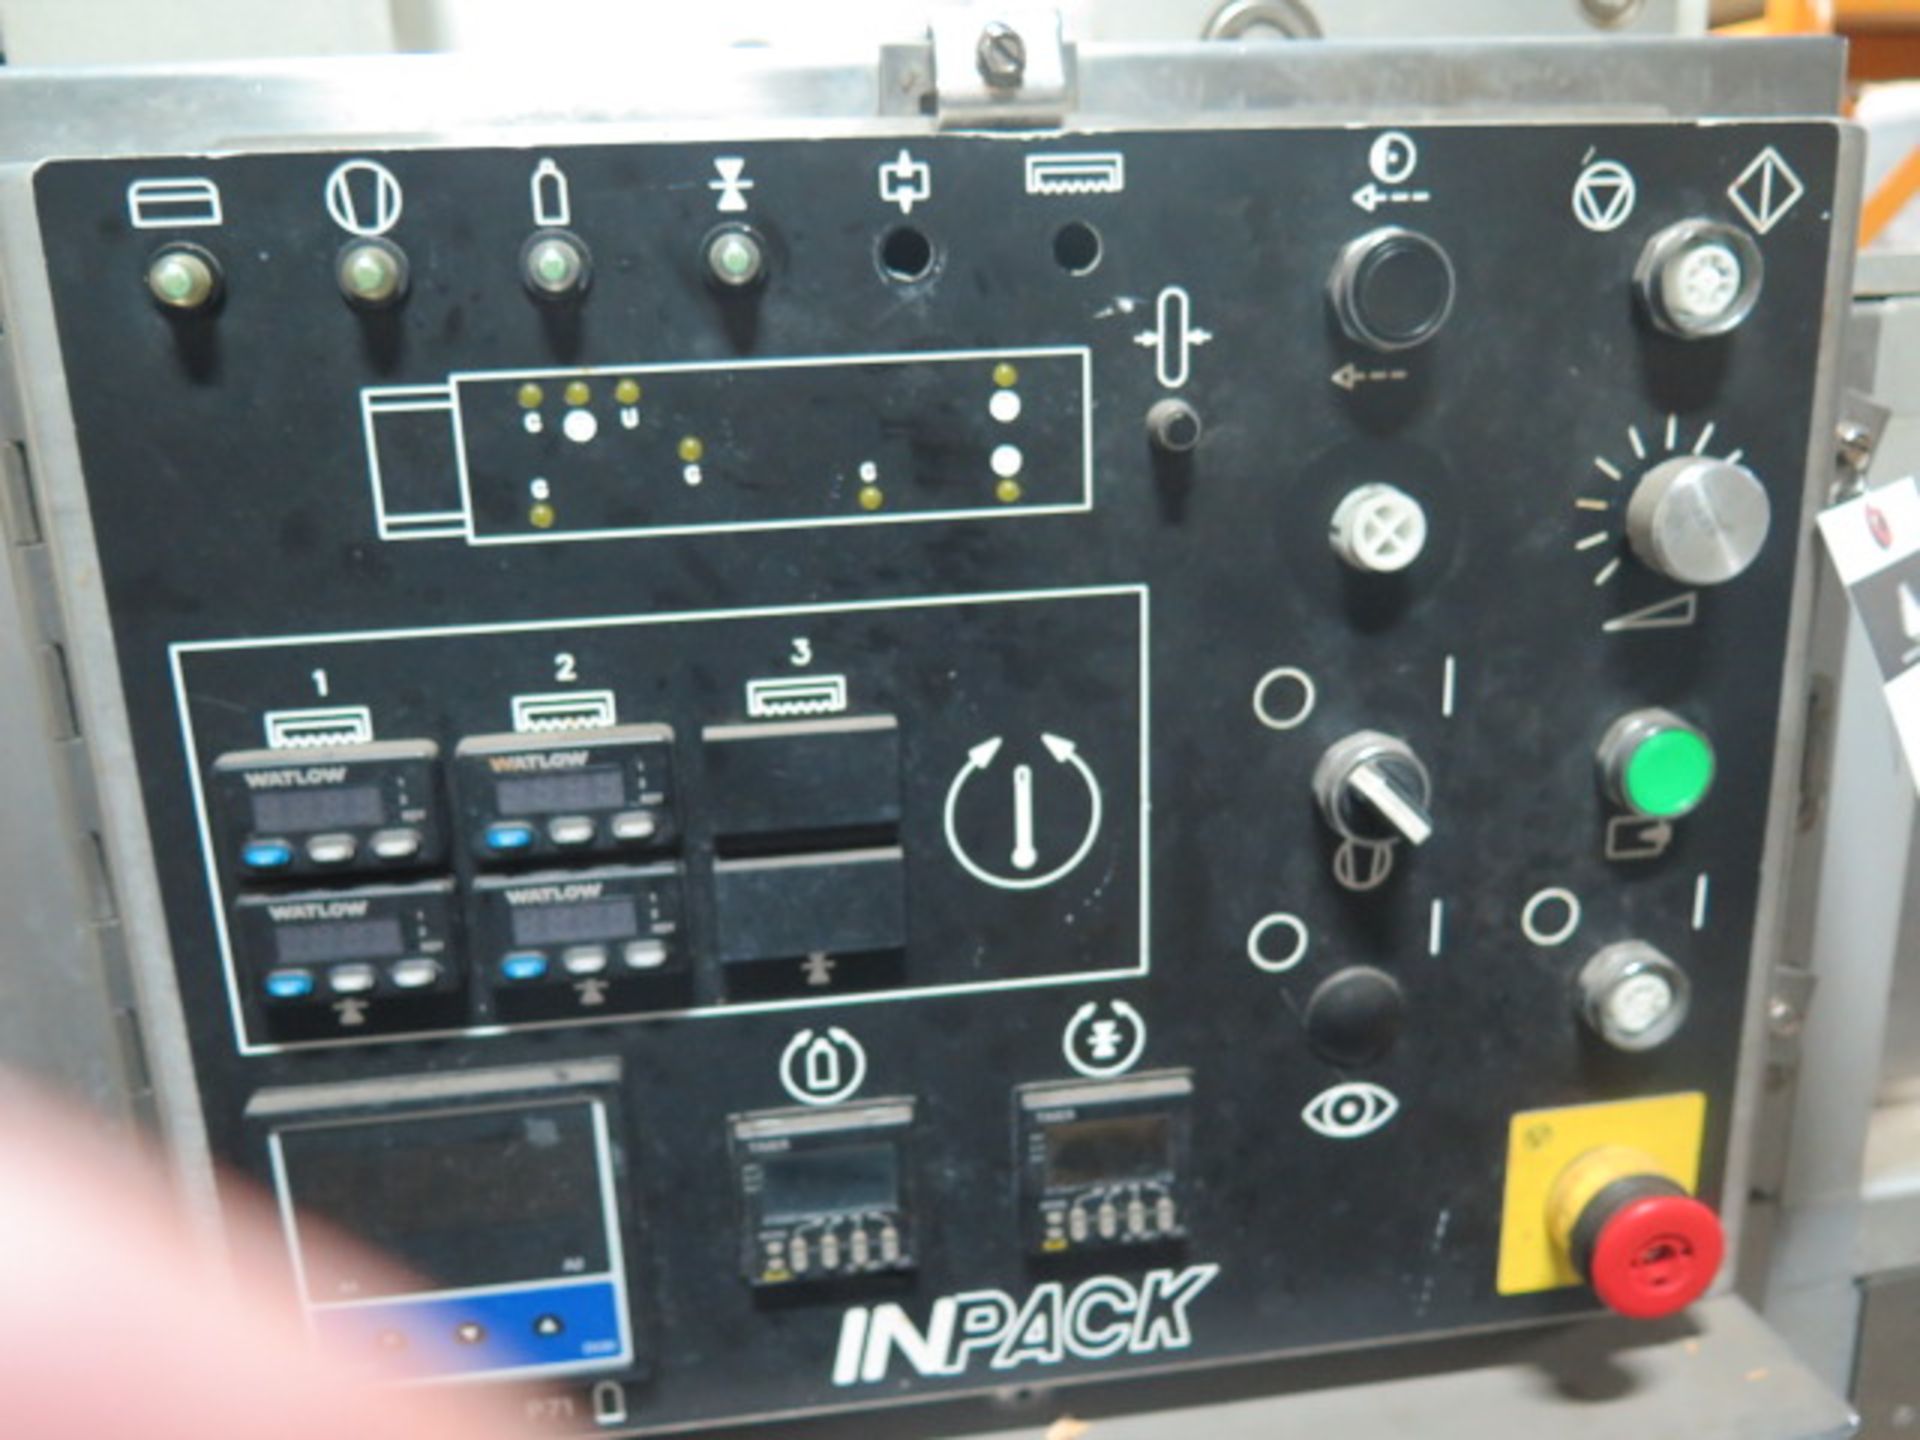 Reiser Ross / InPack A20 mdl. PXG-2 Tray Sealer (Film Cover) Machine w/ 18” Cap, Digital Controls, - Image 6 of 7